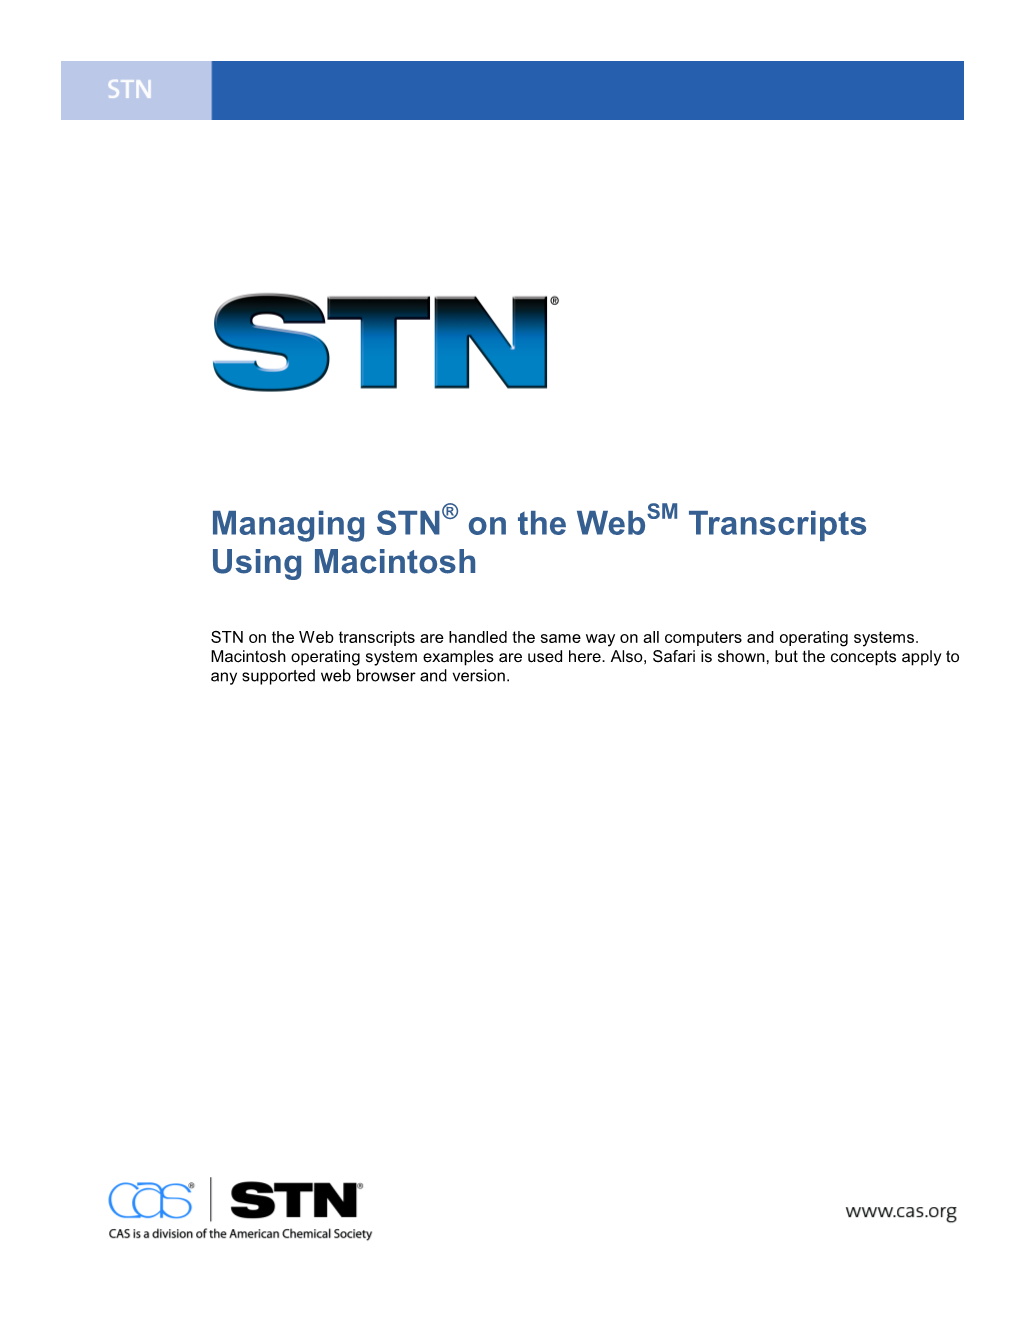 Managing STN on the Web Transcripts Using Macintosh